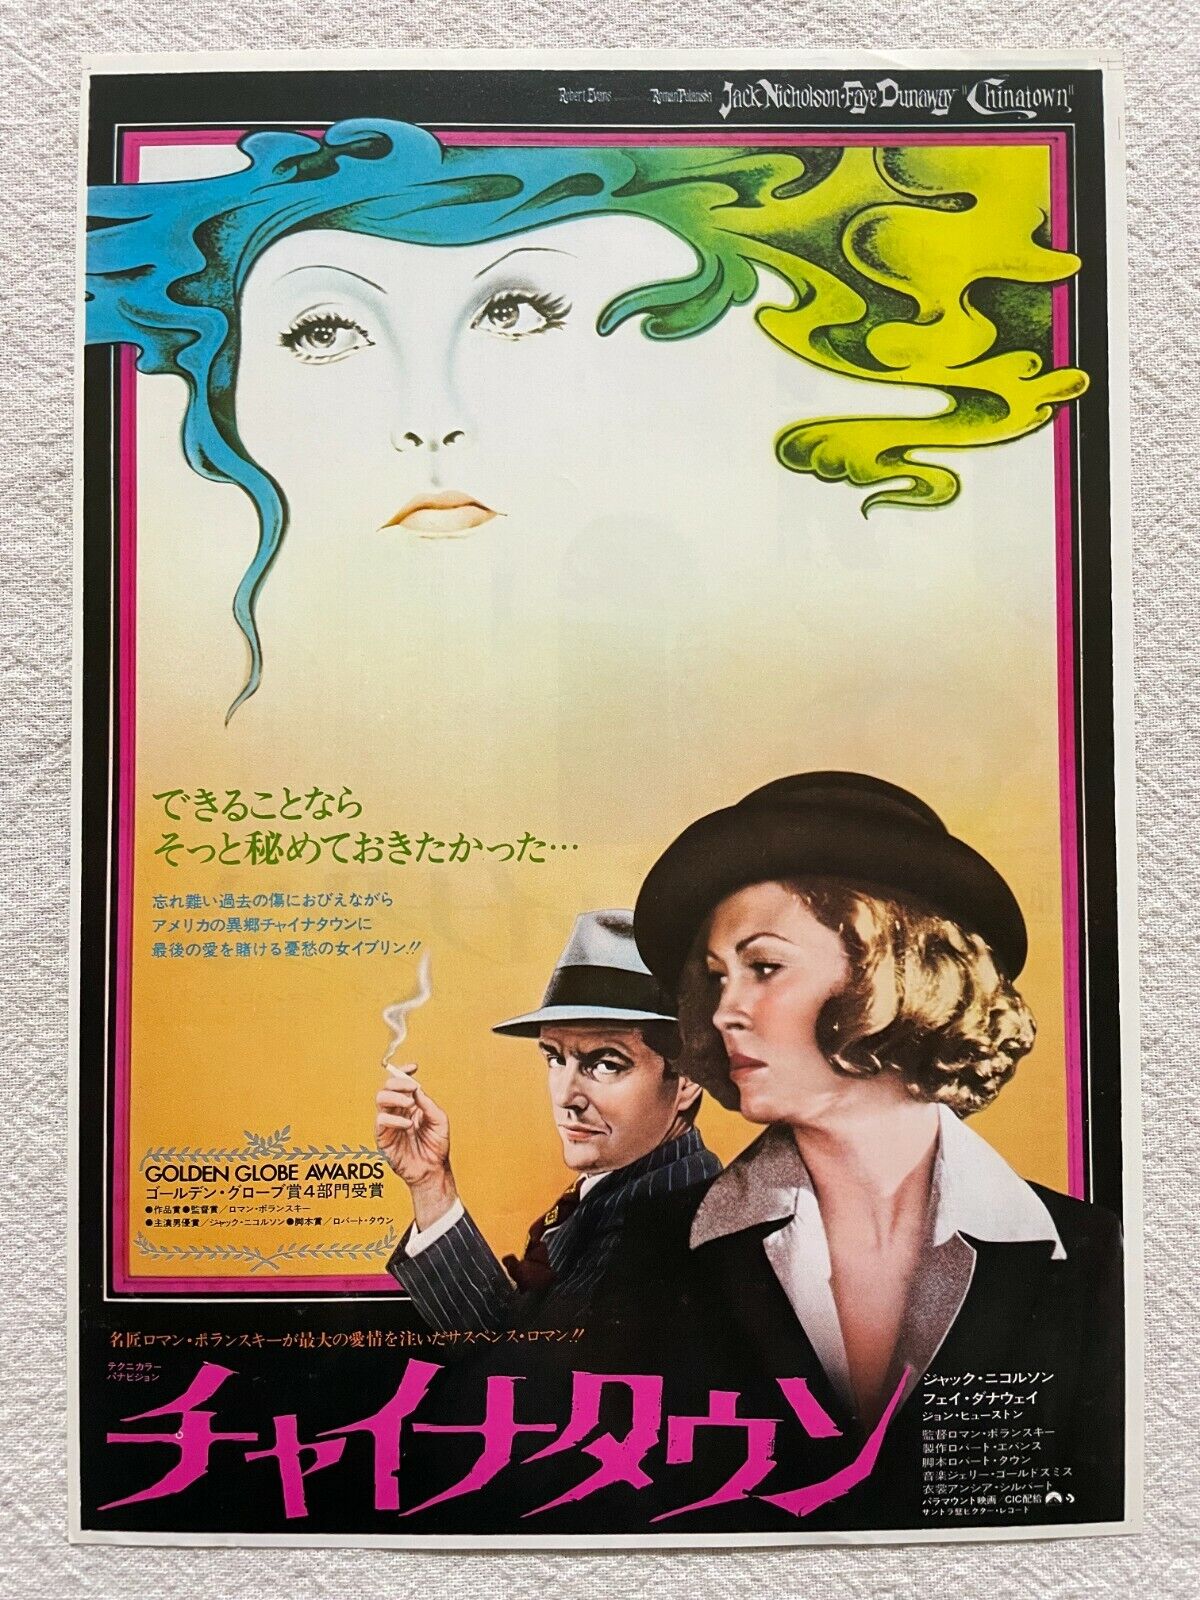 Chinatown San Francisco Mall Jack Nicholson Faye Dunaway 1975 Movie Flyer Japan sold out Chi